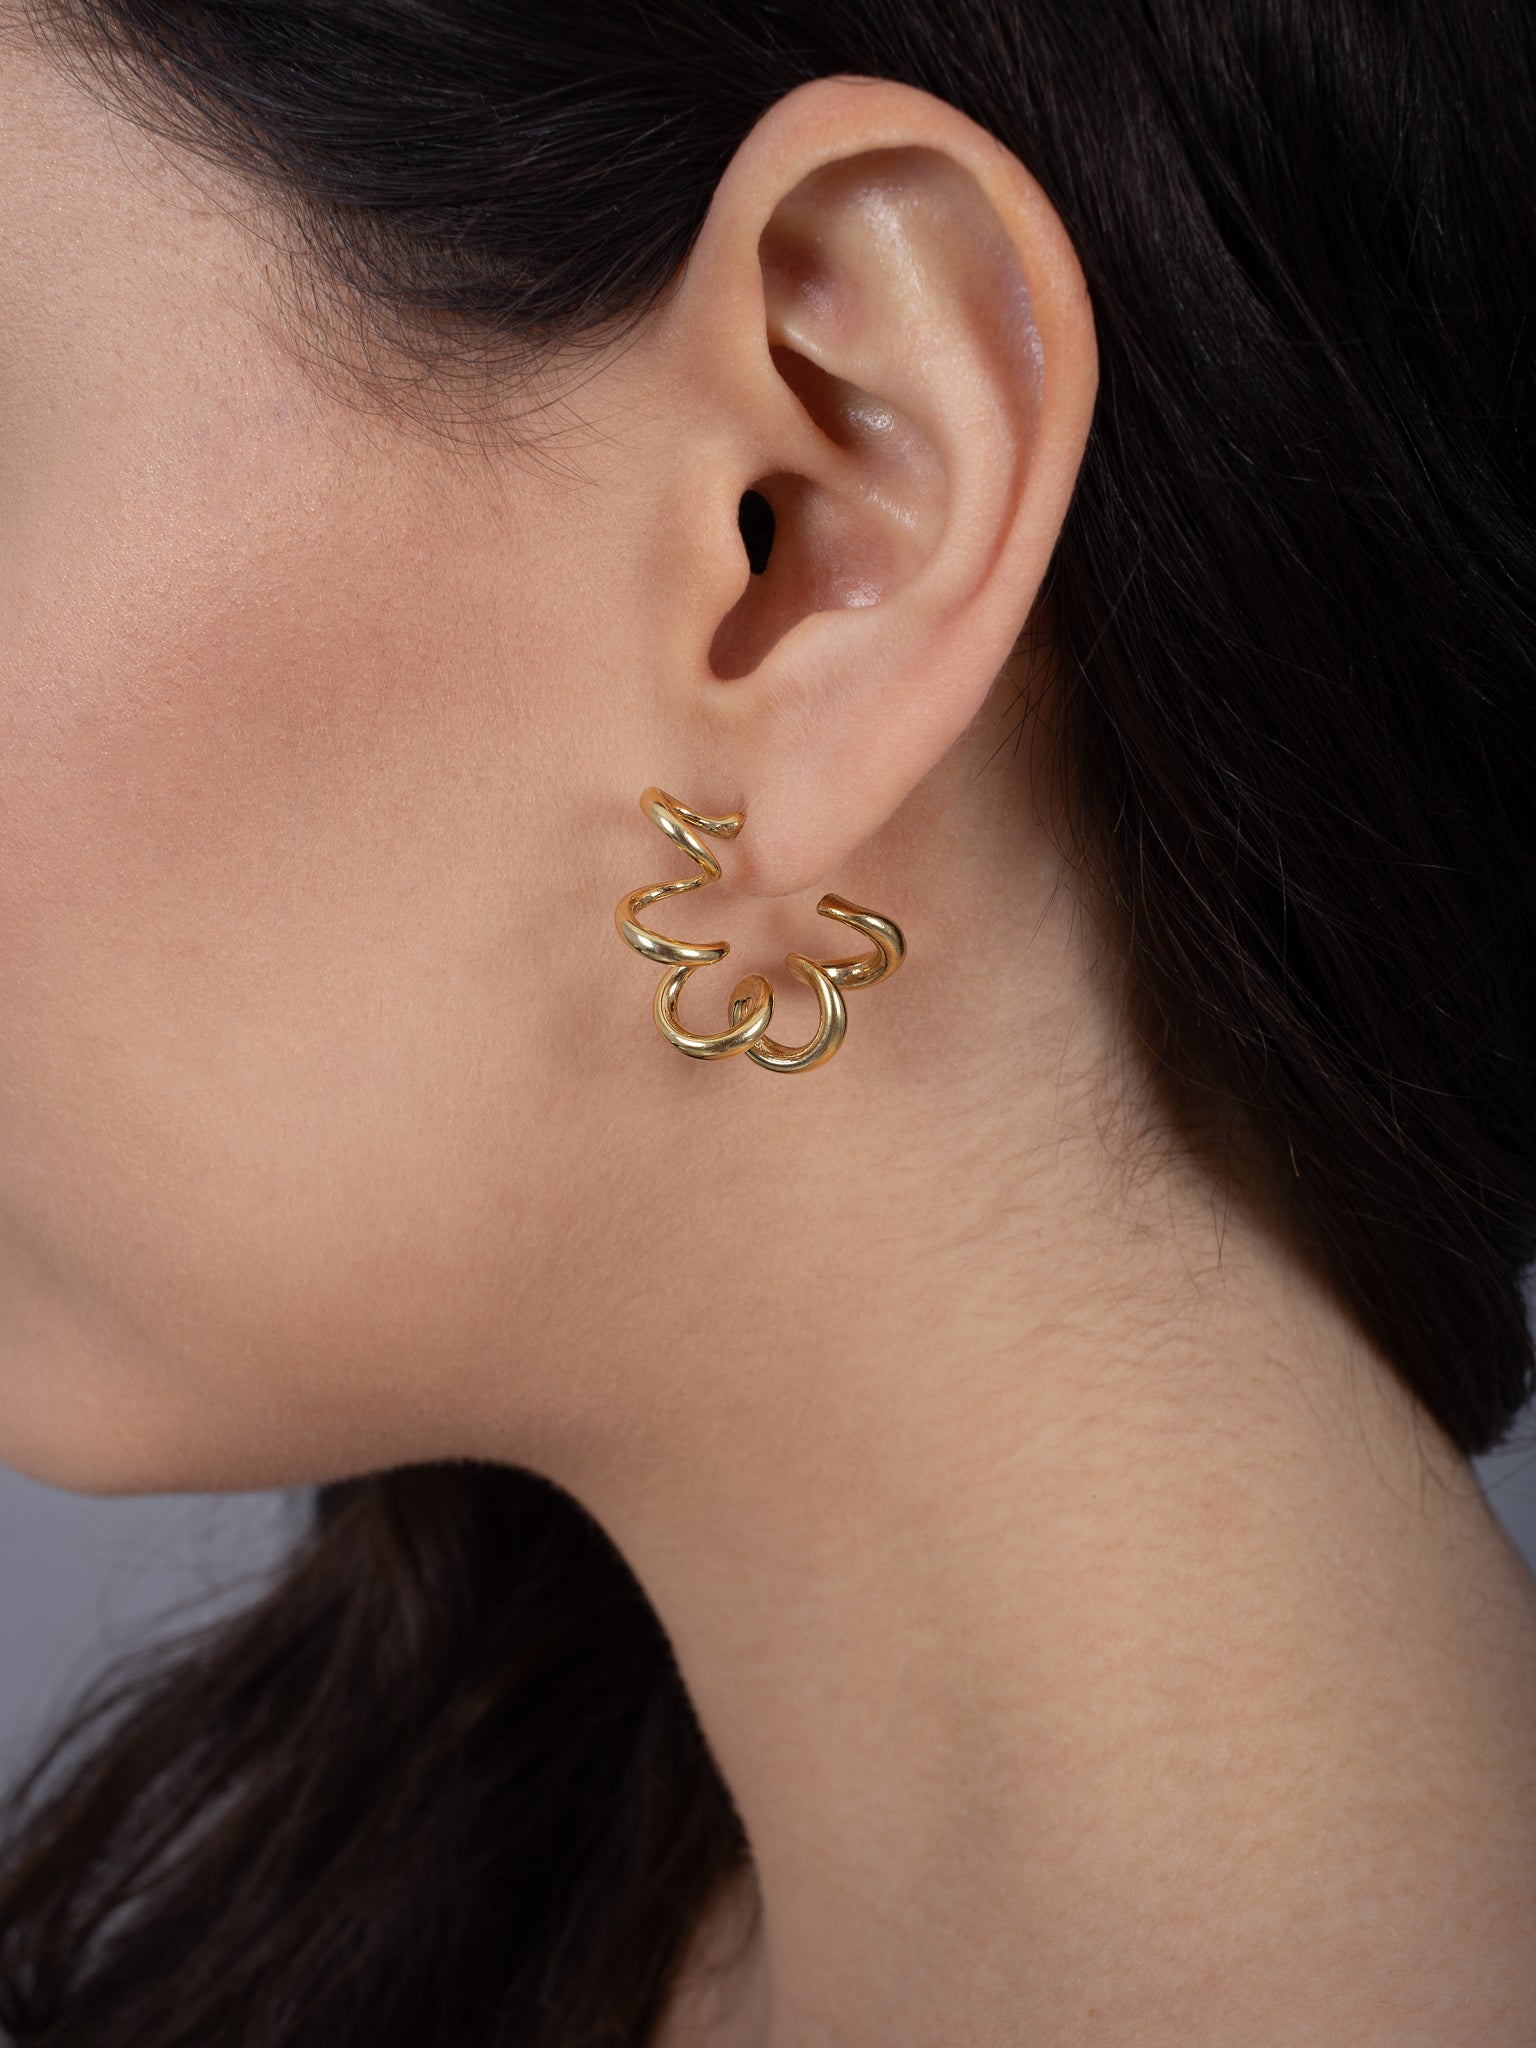 Spring earrings - IDAMARI